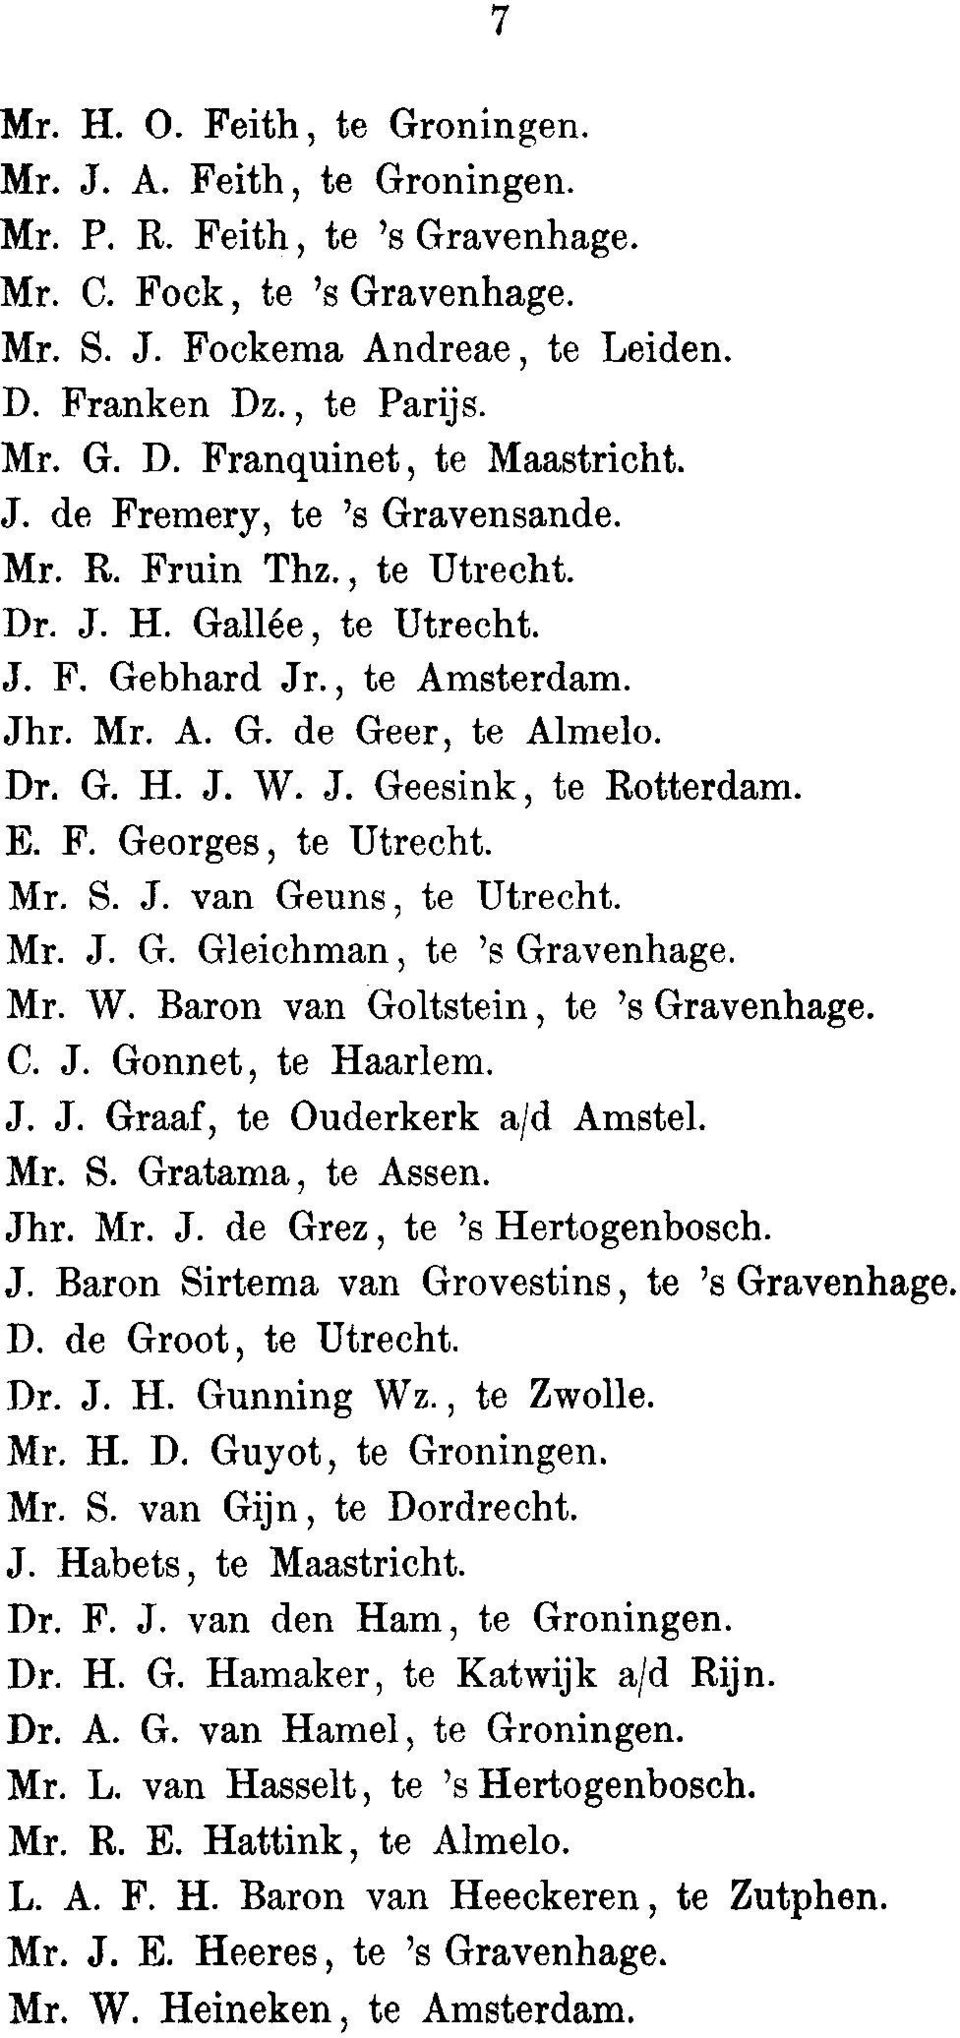 E. F. Georges, to Utrecht. Mr. S. J. van Geuns, to Utrecht. Mr. J. G. Gleichman, to 's Gravenhage. Mr. W. Baron van Goltstein, to 's Gravenhage. C. J. Gonnet, to Haarlem. J. J. Graaf, to Ouderkerk aid Amstel.